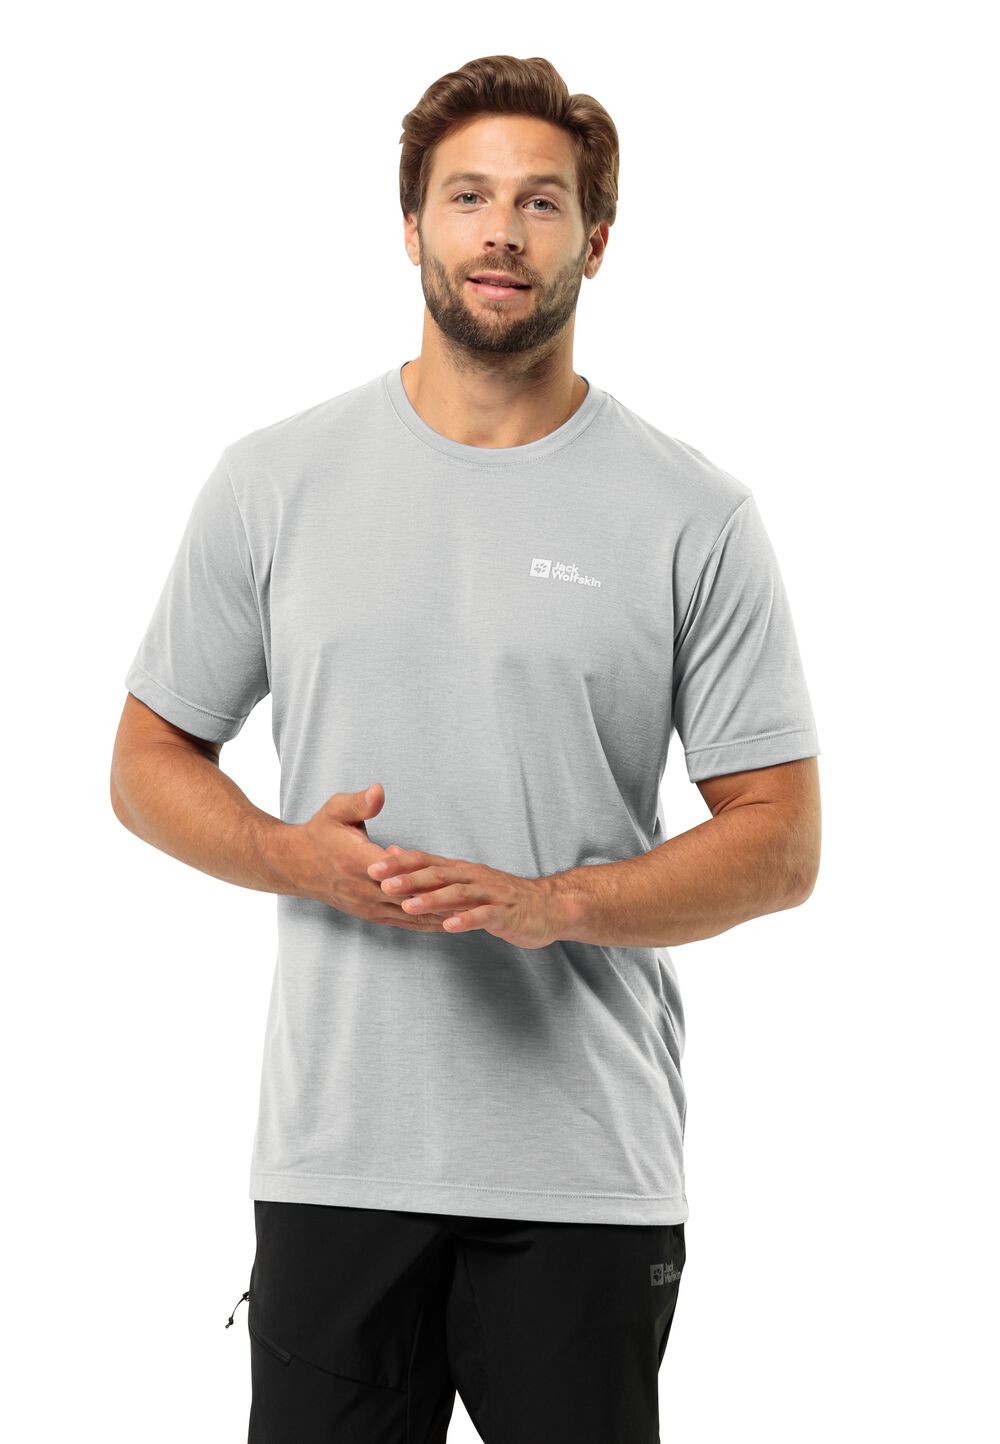 Jack Wolfskin Vonnan S S T-Shirt Men Functioneel shirt Heren XXL grijs cool grey